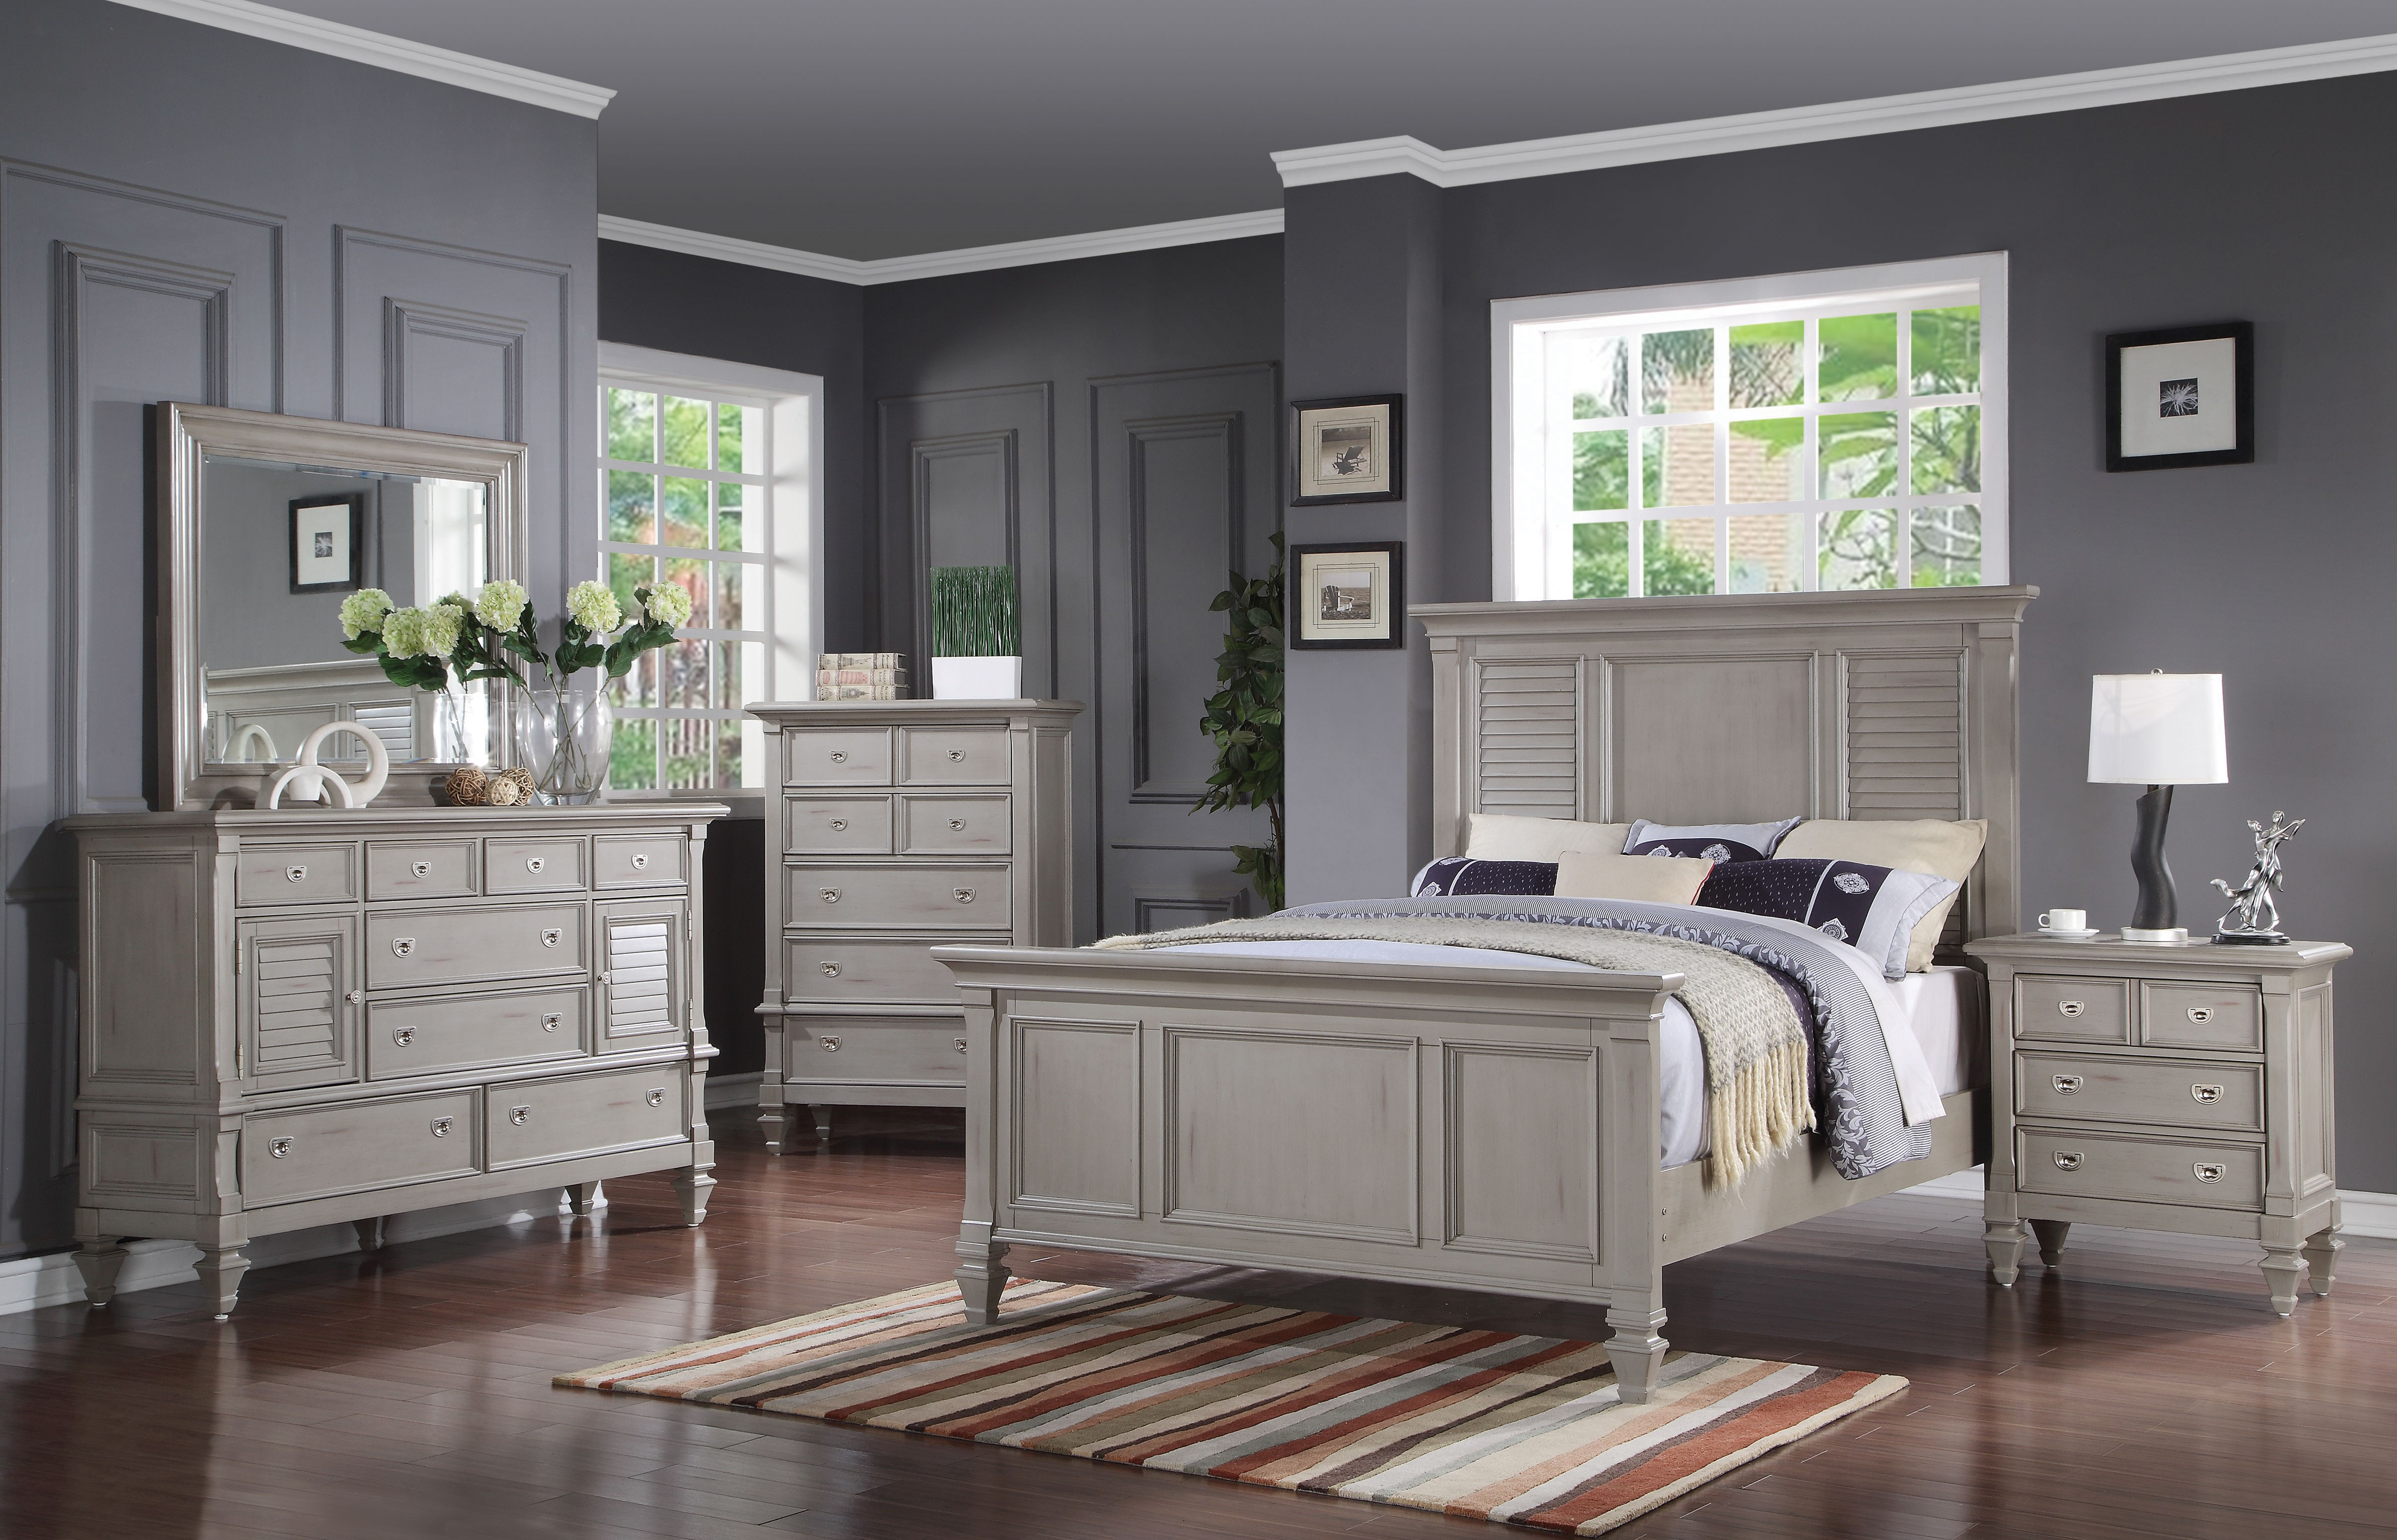 grey painted bedroom furniture ideas